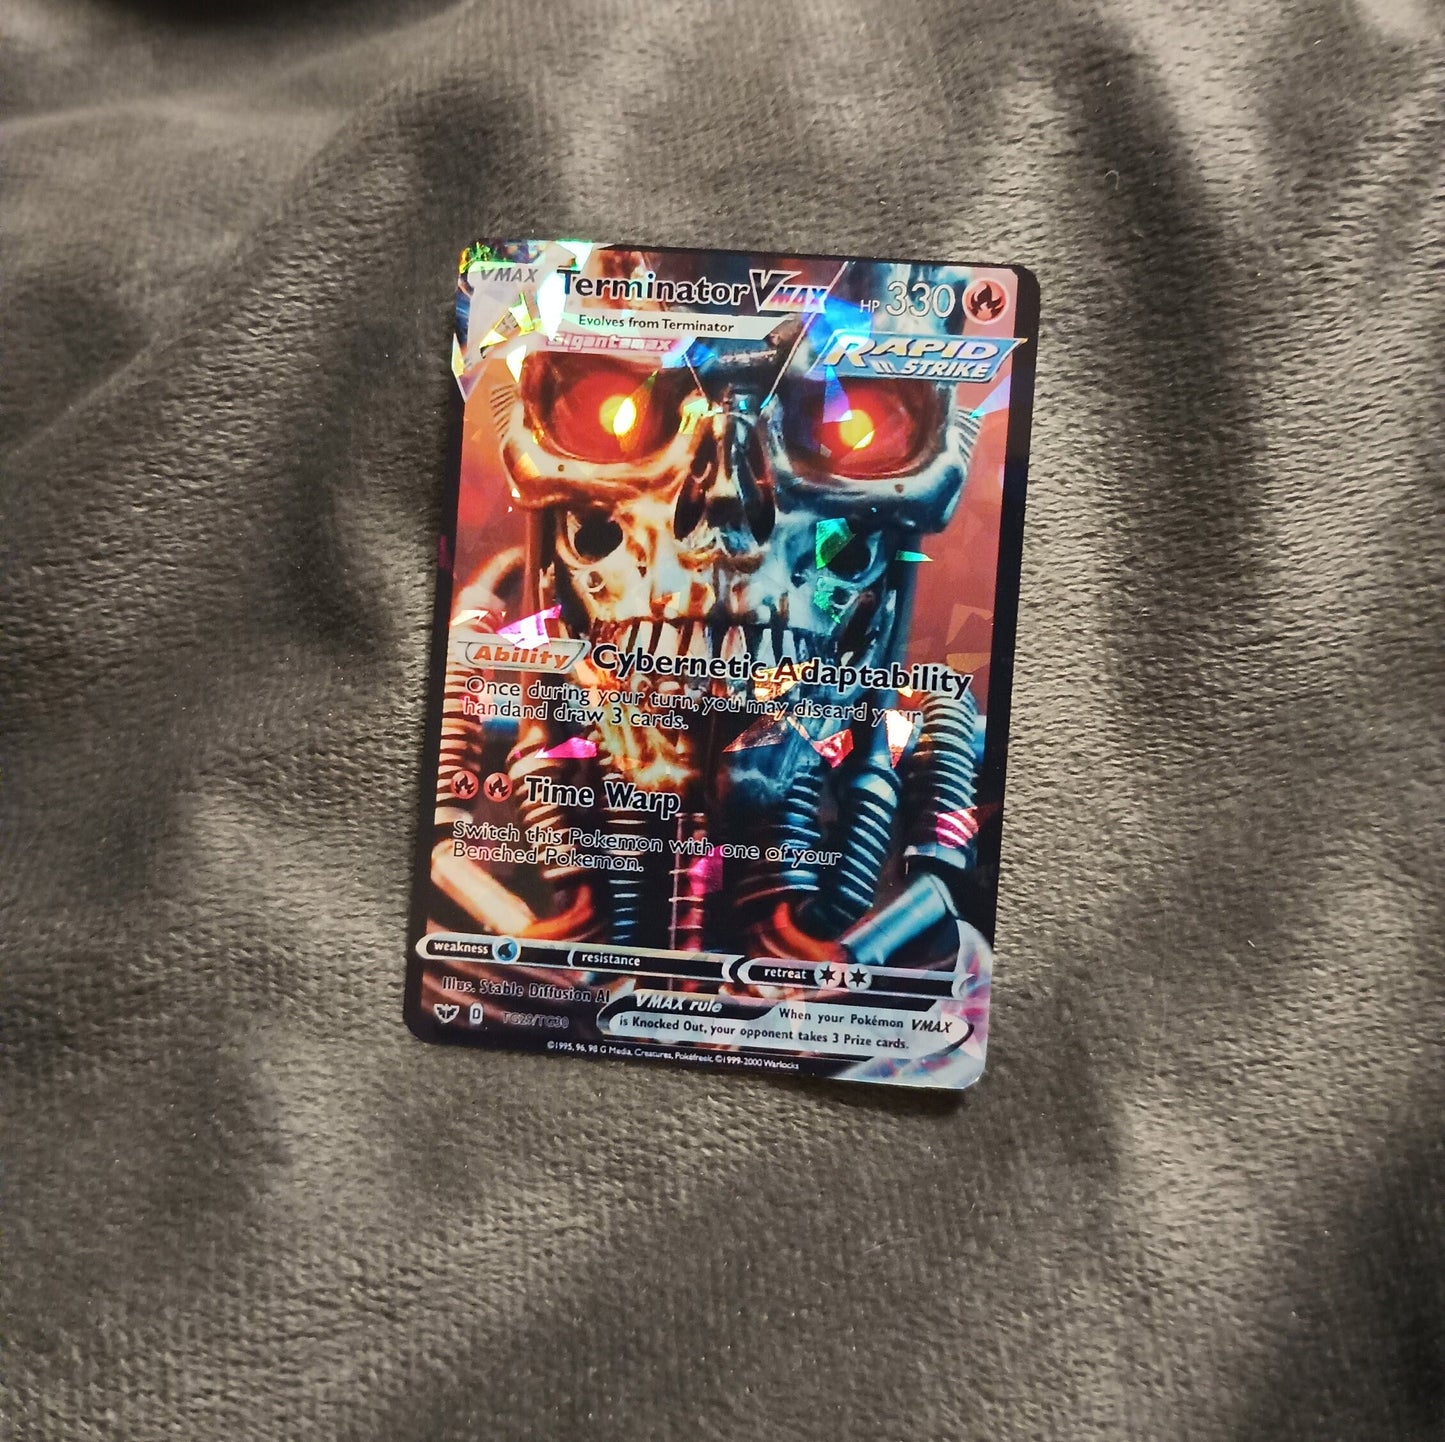 Terminator Pokemon Card